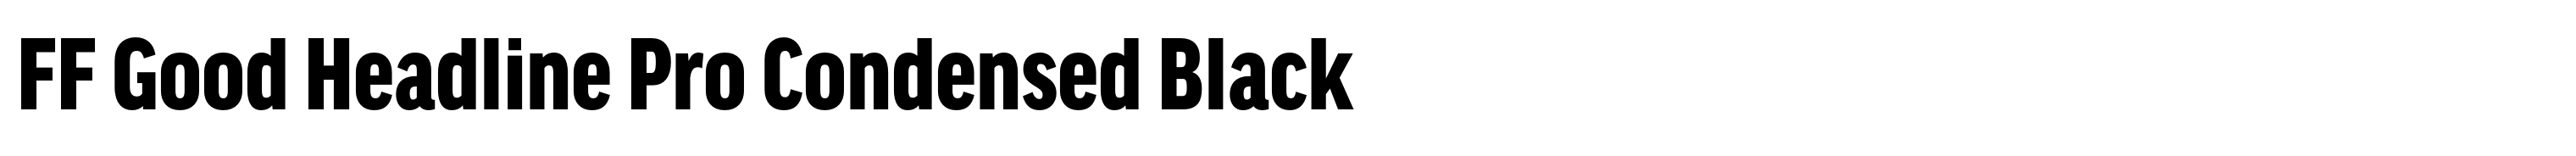 FF Good Headline Pro Condensed Black